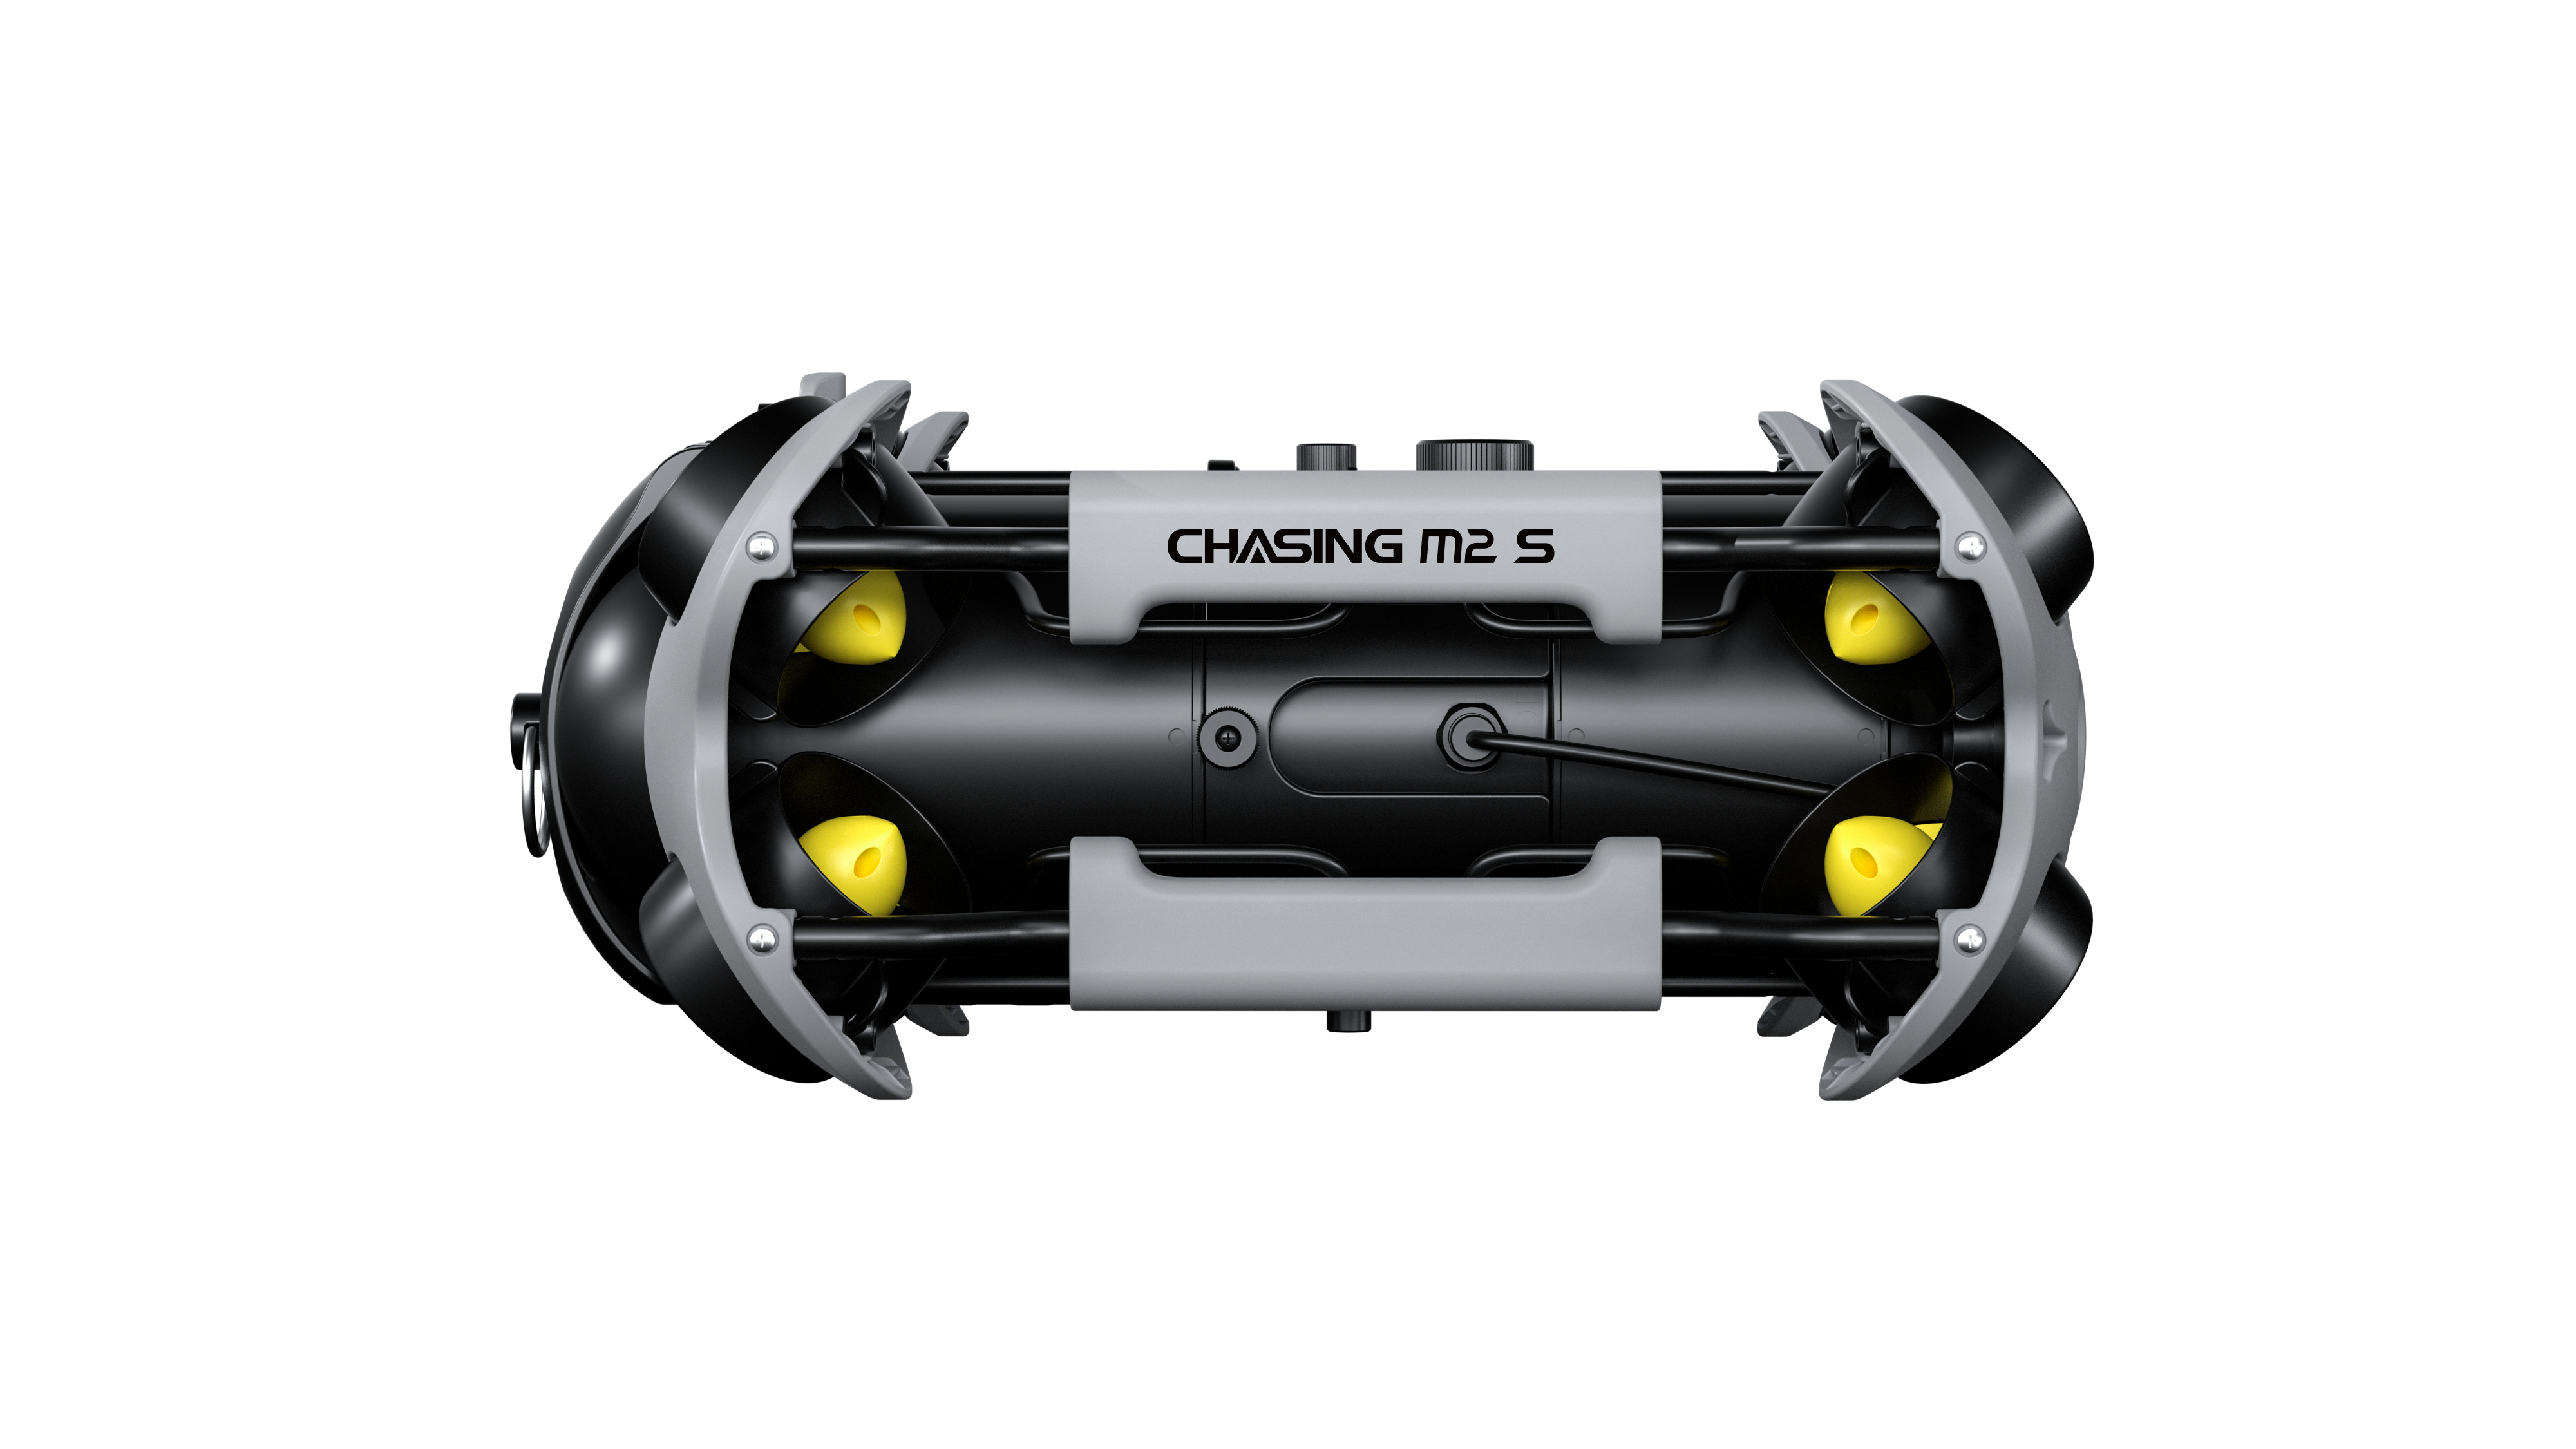 Chasing - M2 S (200M)